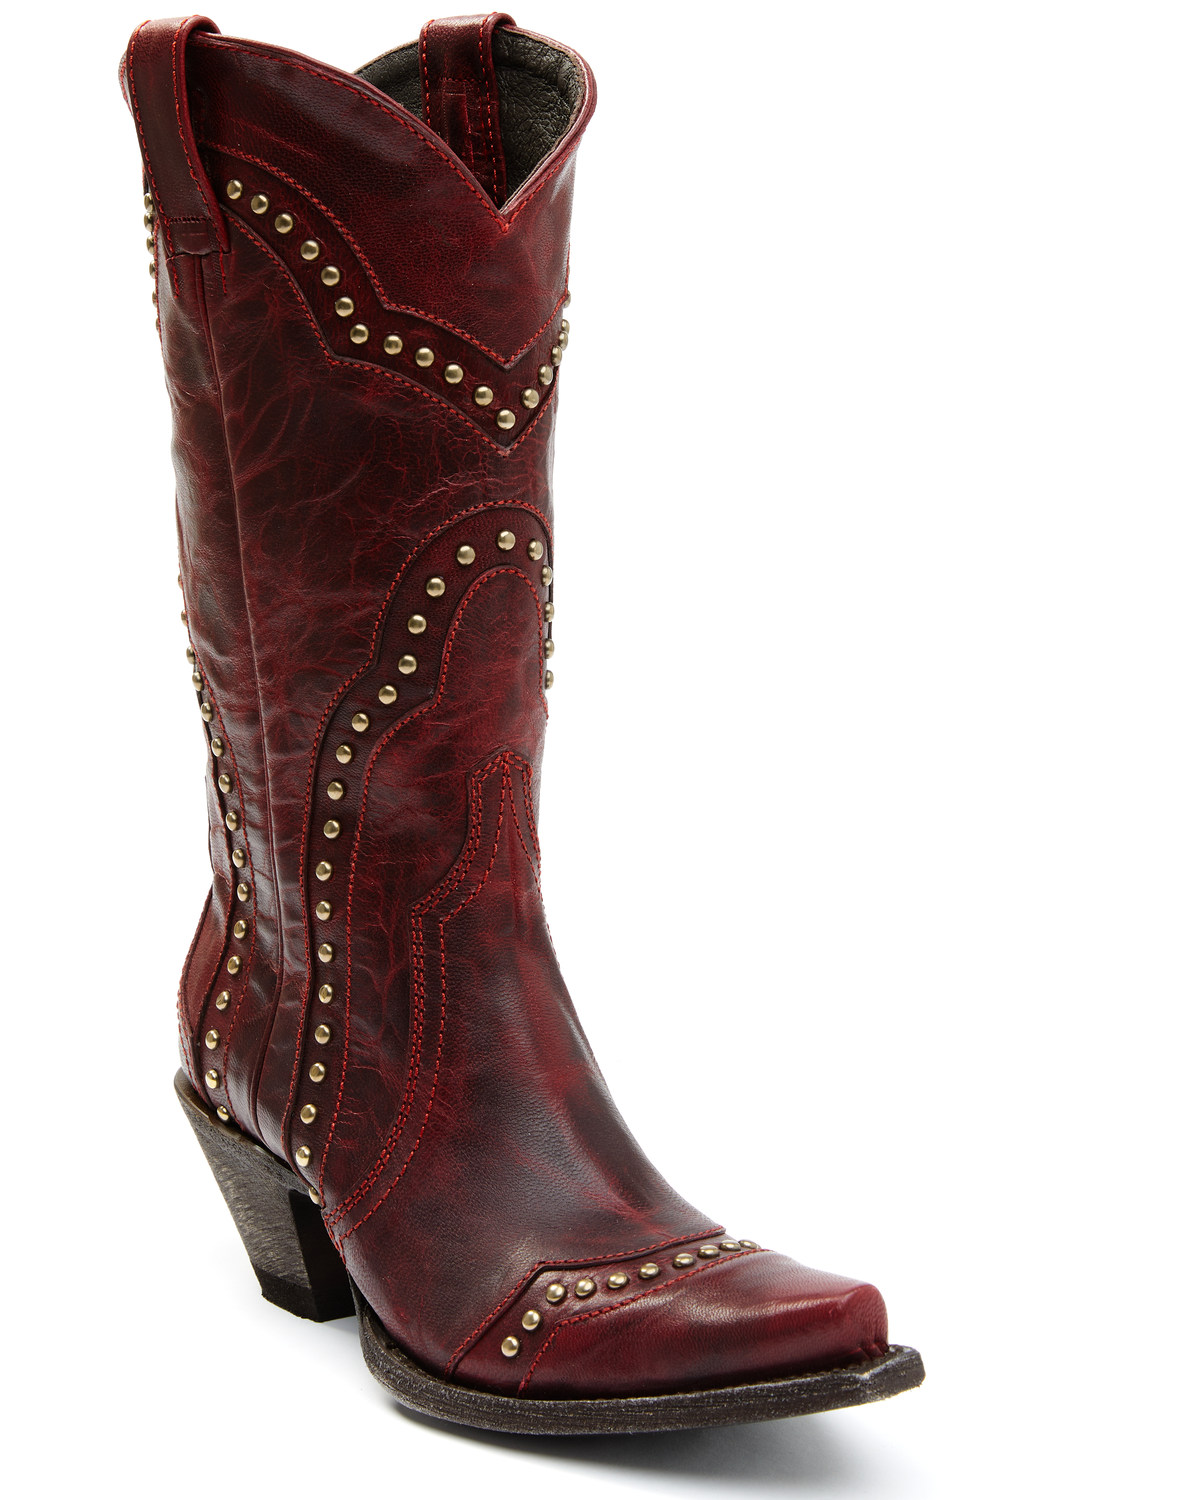 Idyllwind Women's Rebel Western Boots - Snip Toe